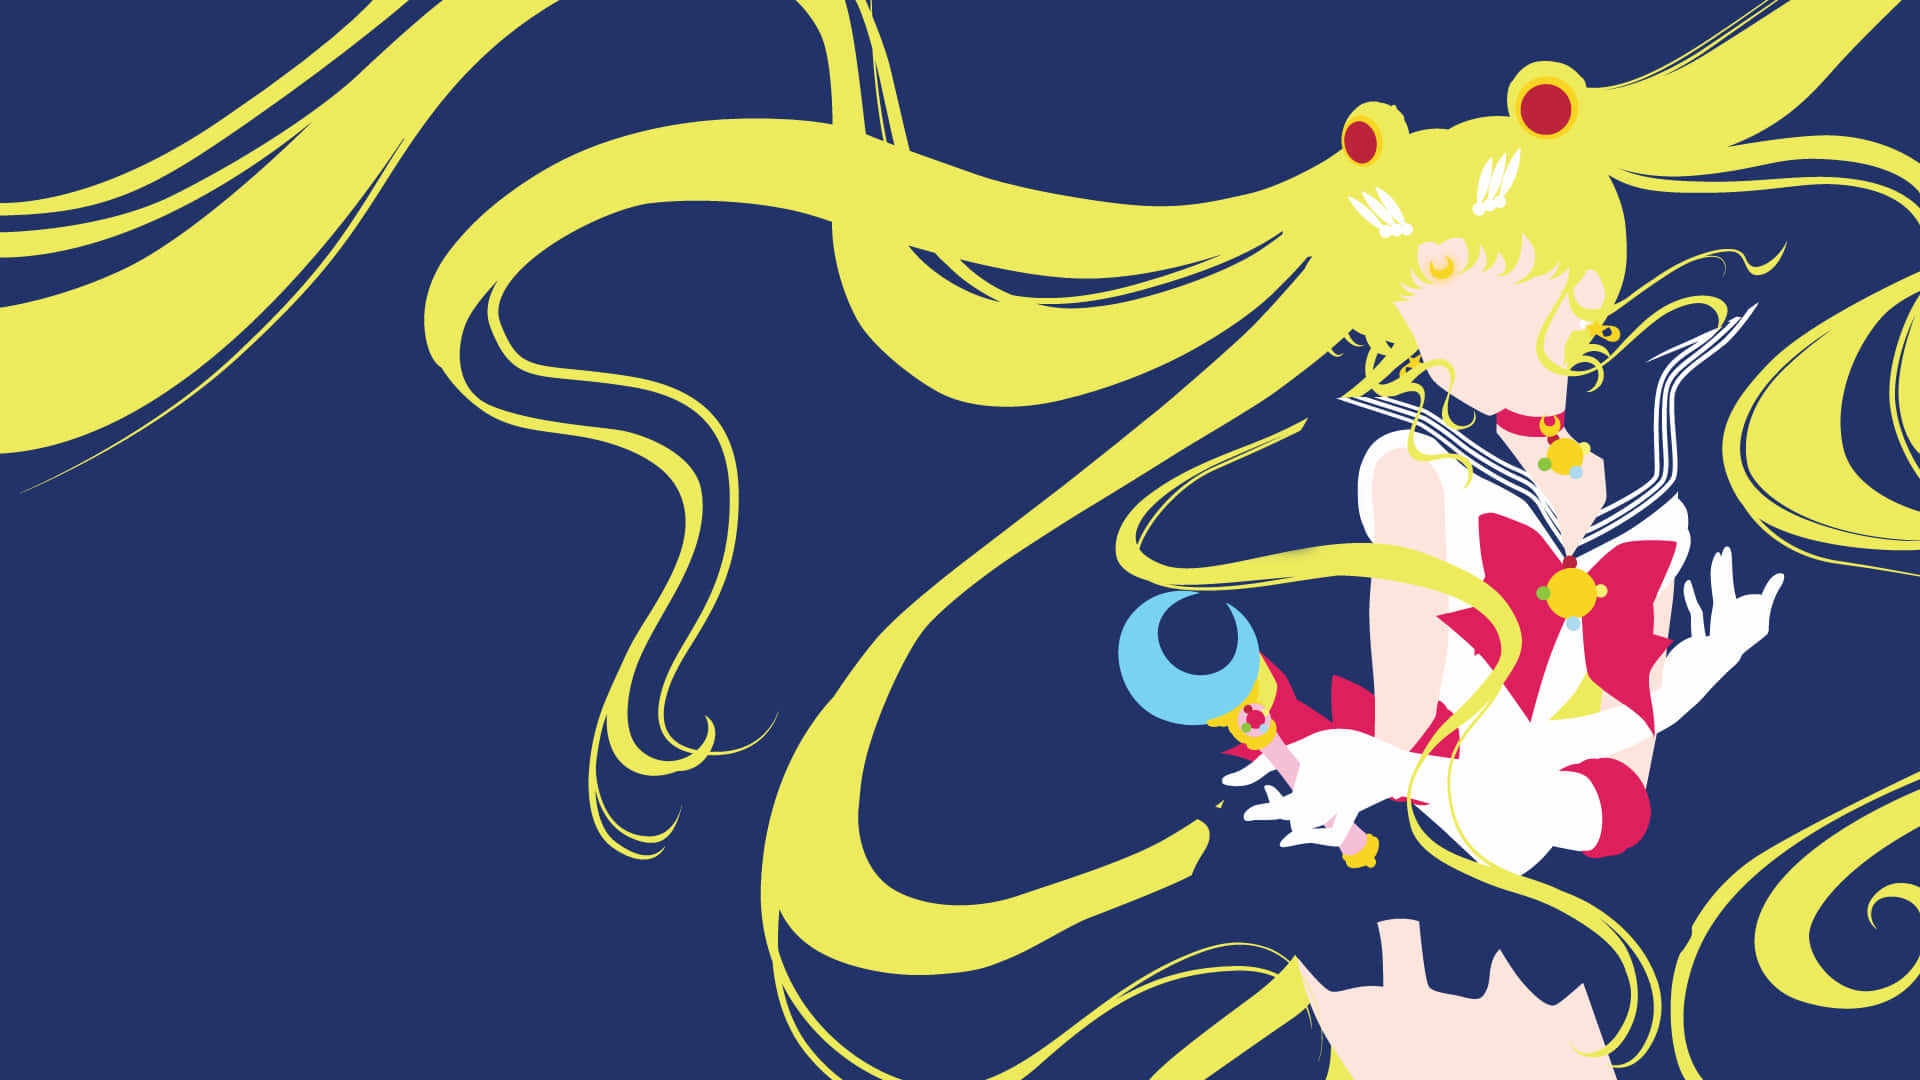 Cheerful&Magical, a Sailor Moon-Themed Pattern Wallpaper